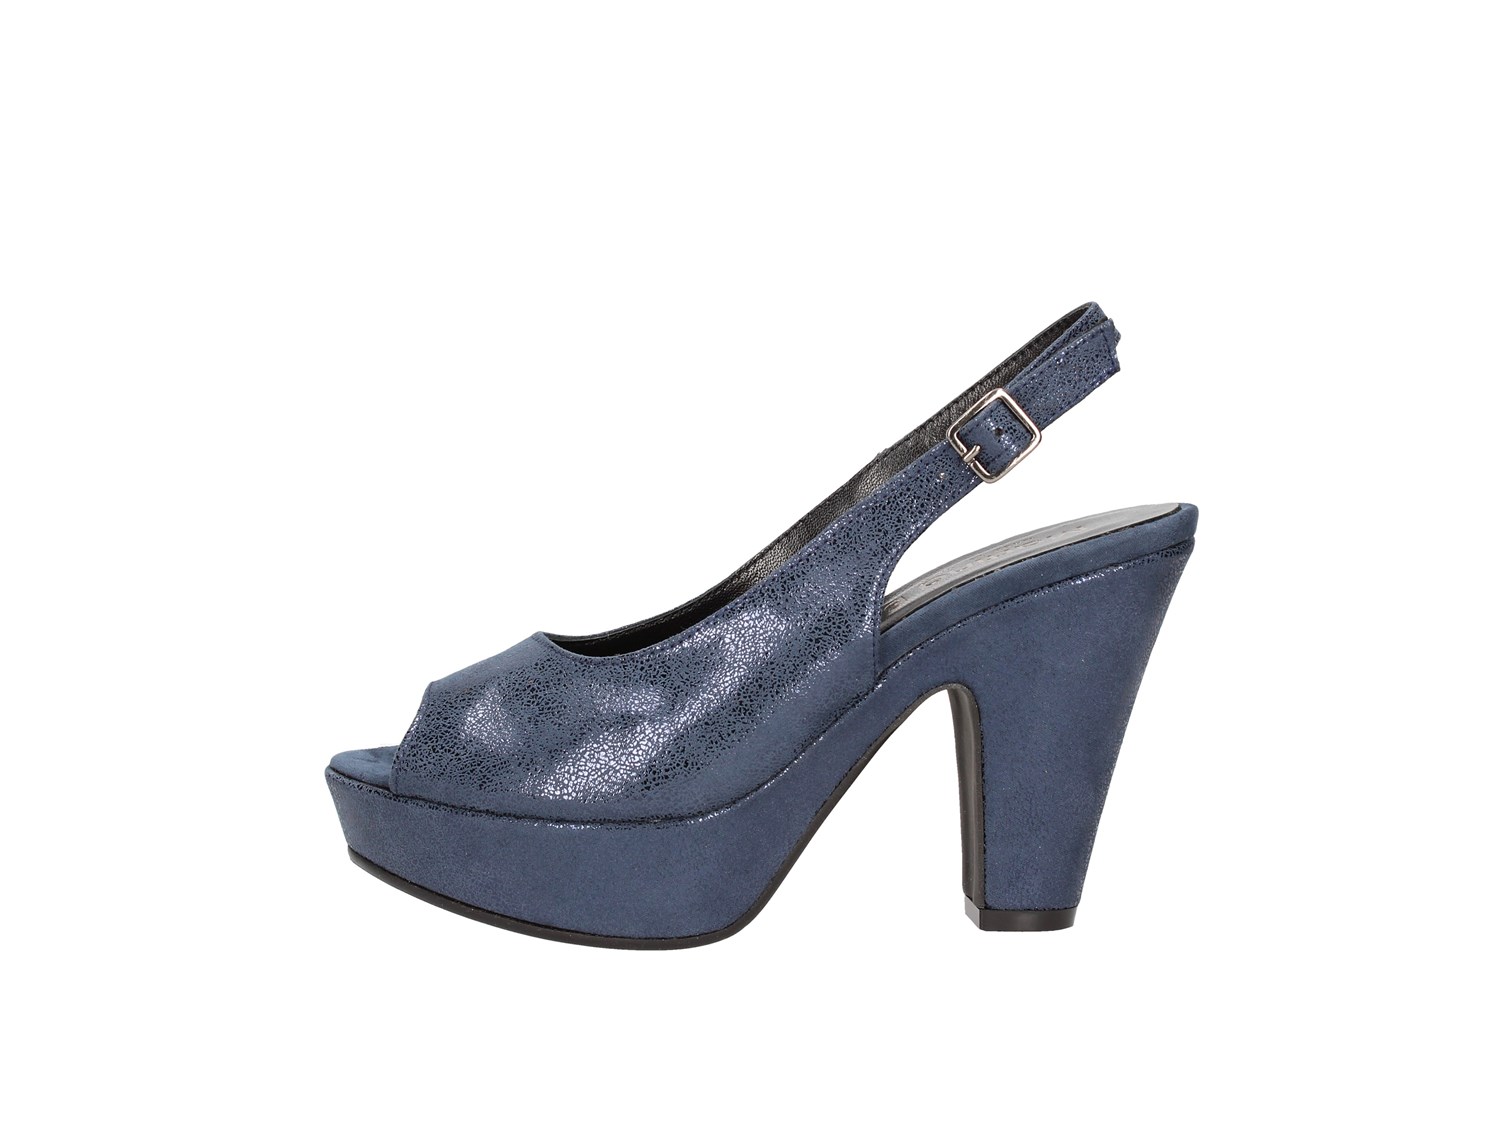 Martina B 19-159-c8 Blue Shoes Women Sandal